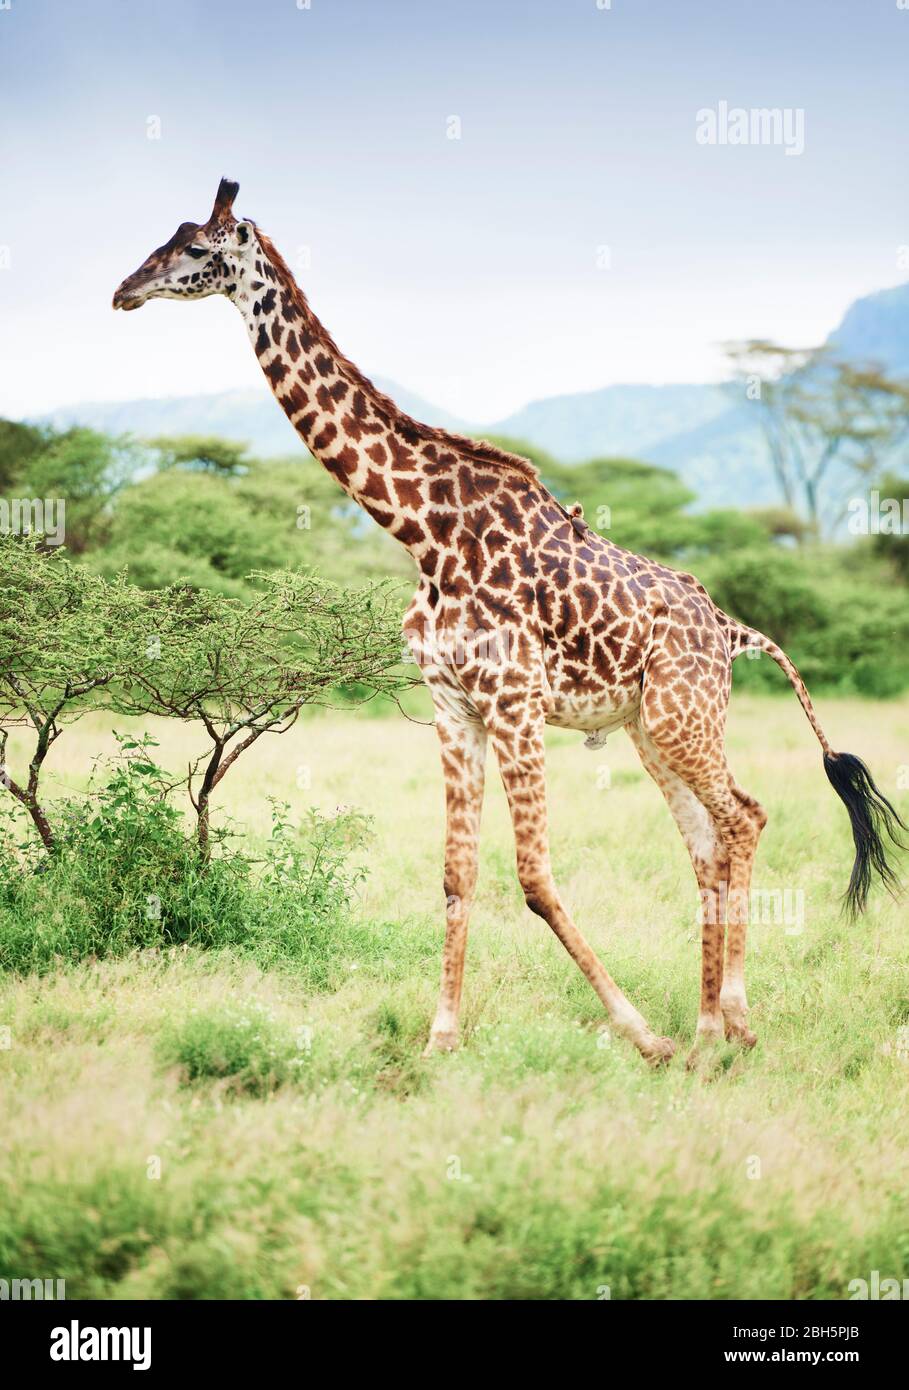 Shot of giraffe in Africa Stock Photo